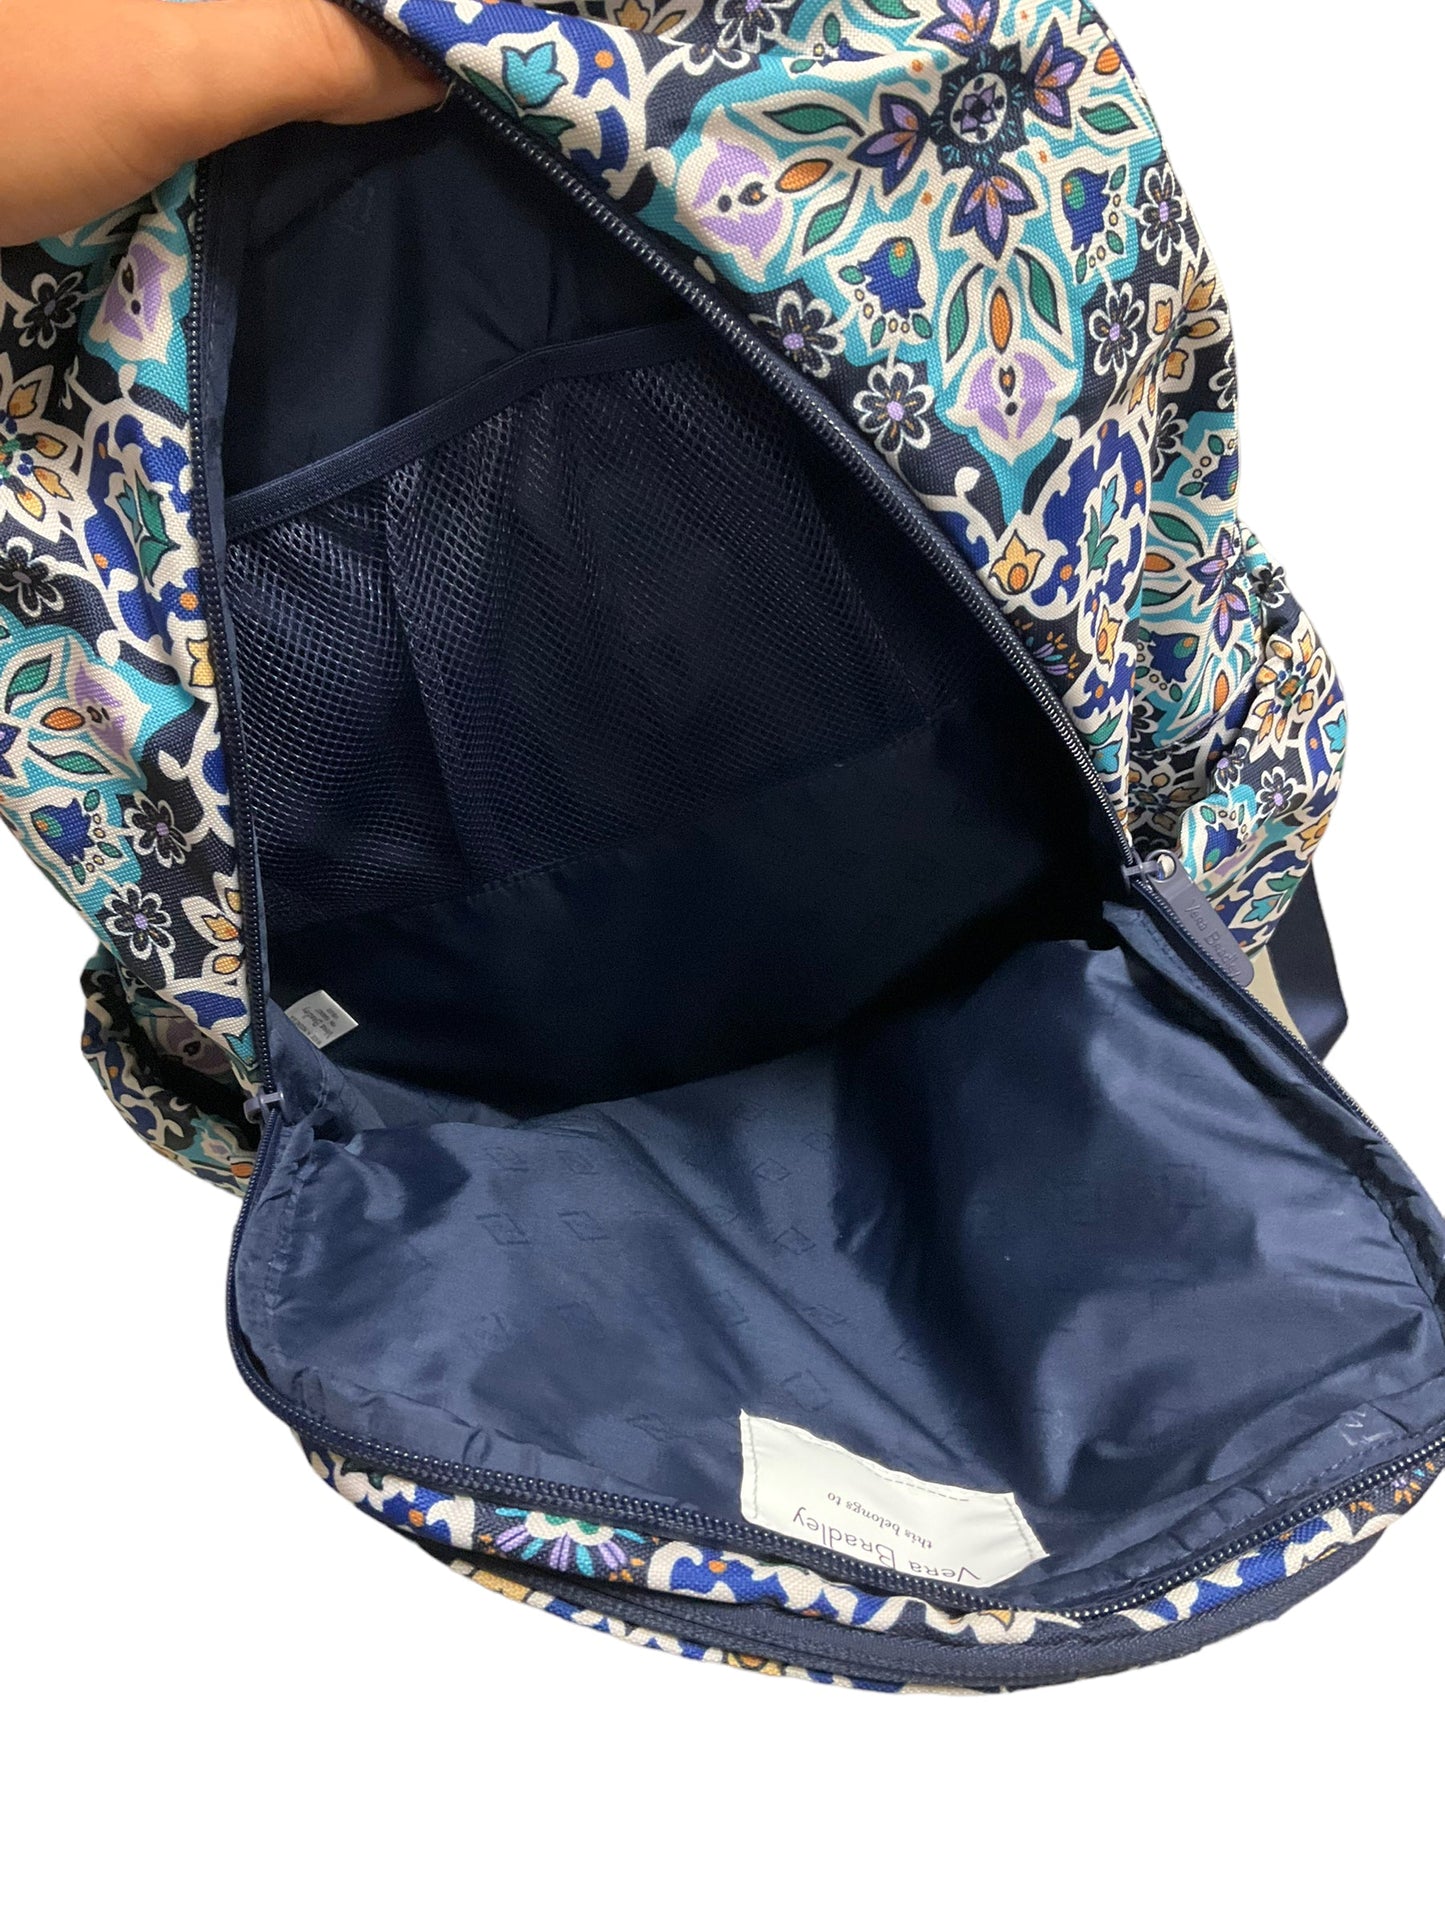 Backpack Vera Bradley, Size Large